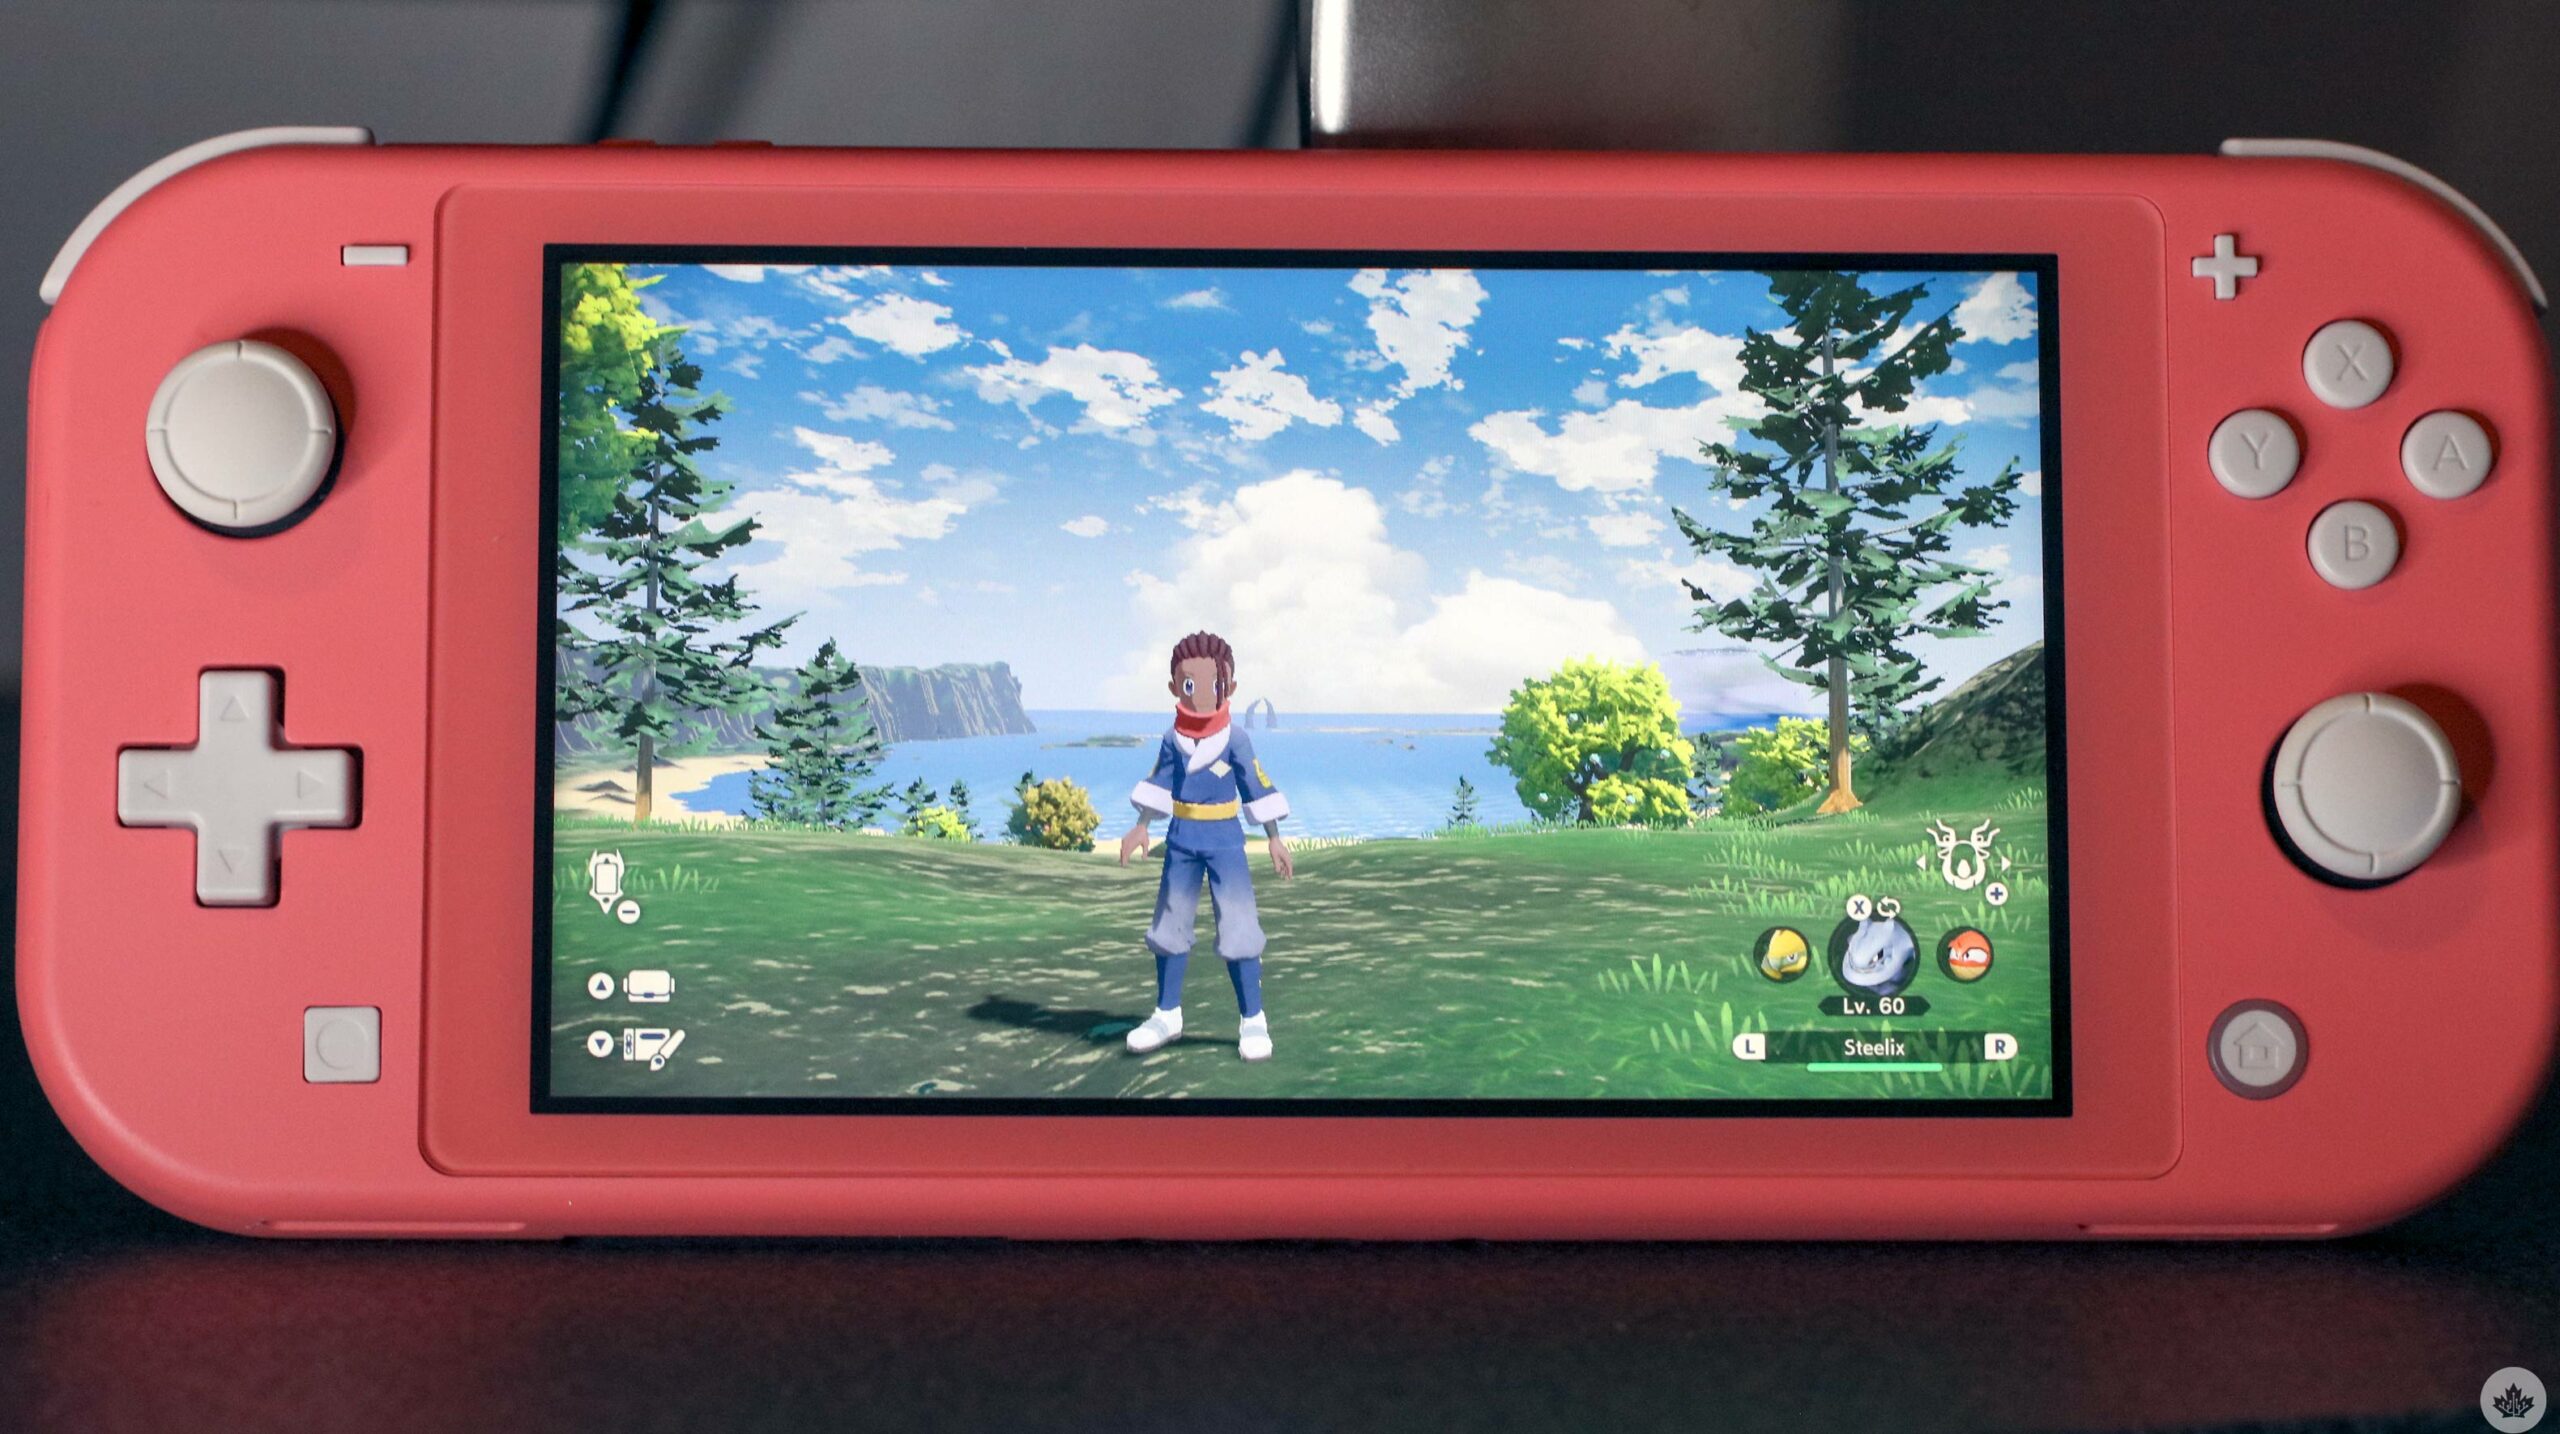  Pokemon Legends: Arceus (Nintendo Switch) : Video Games